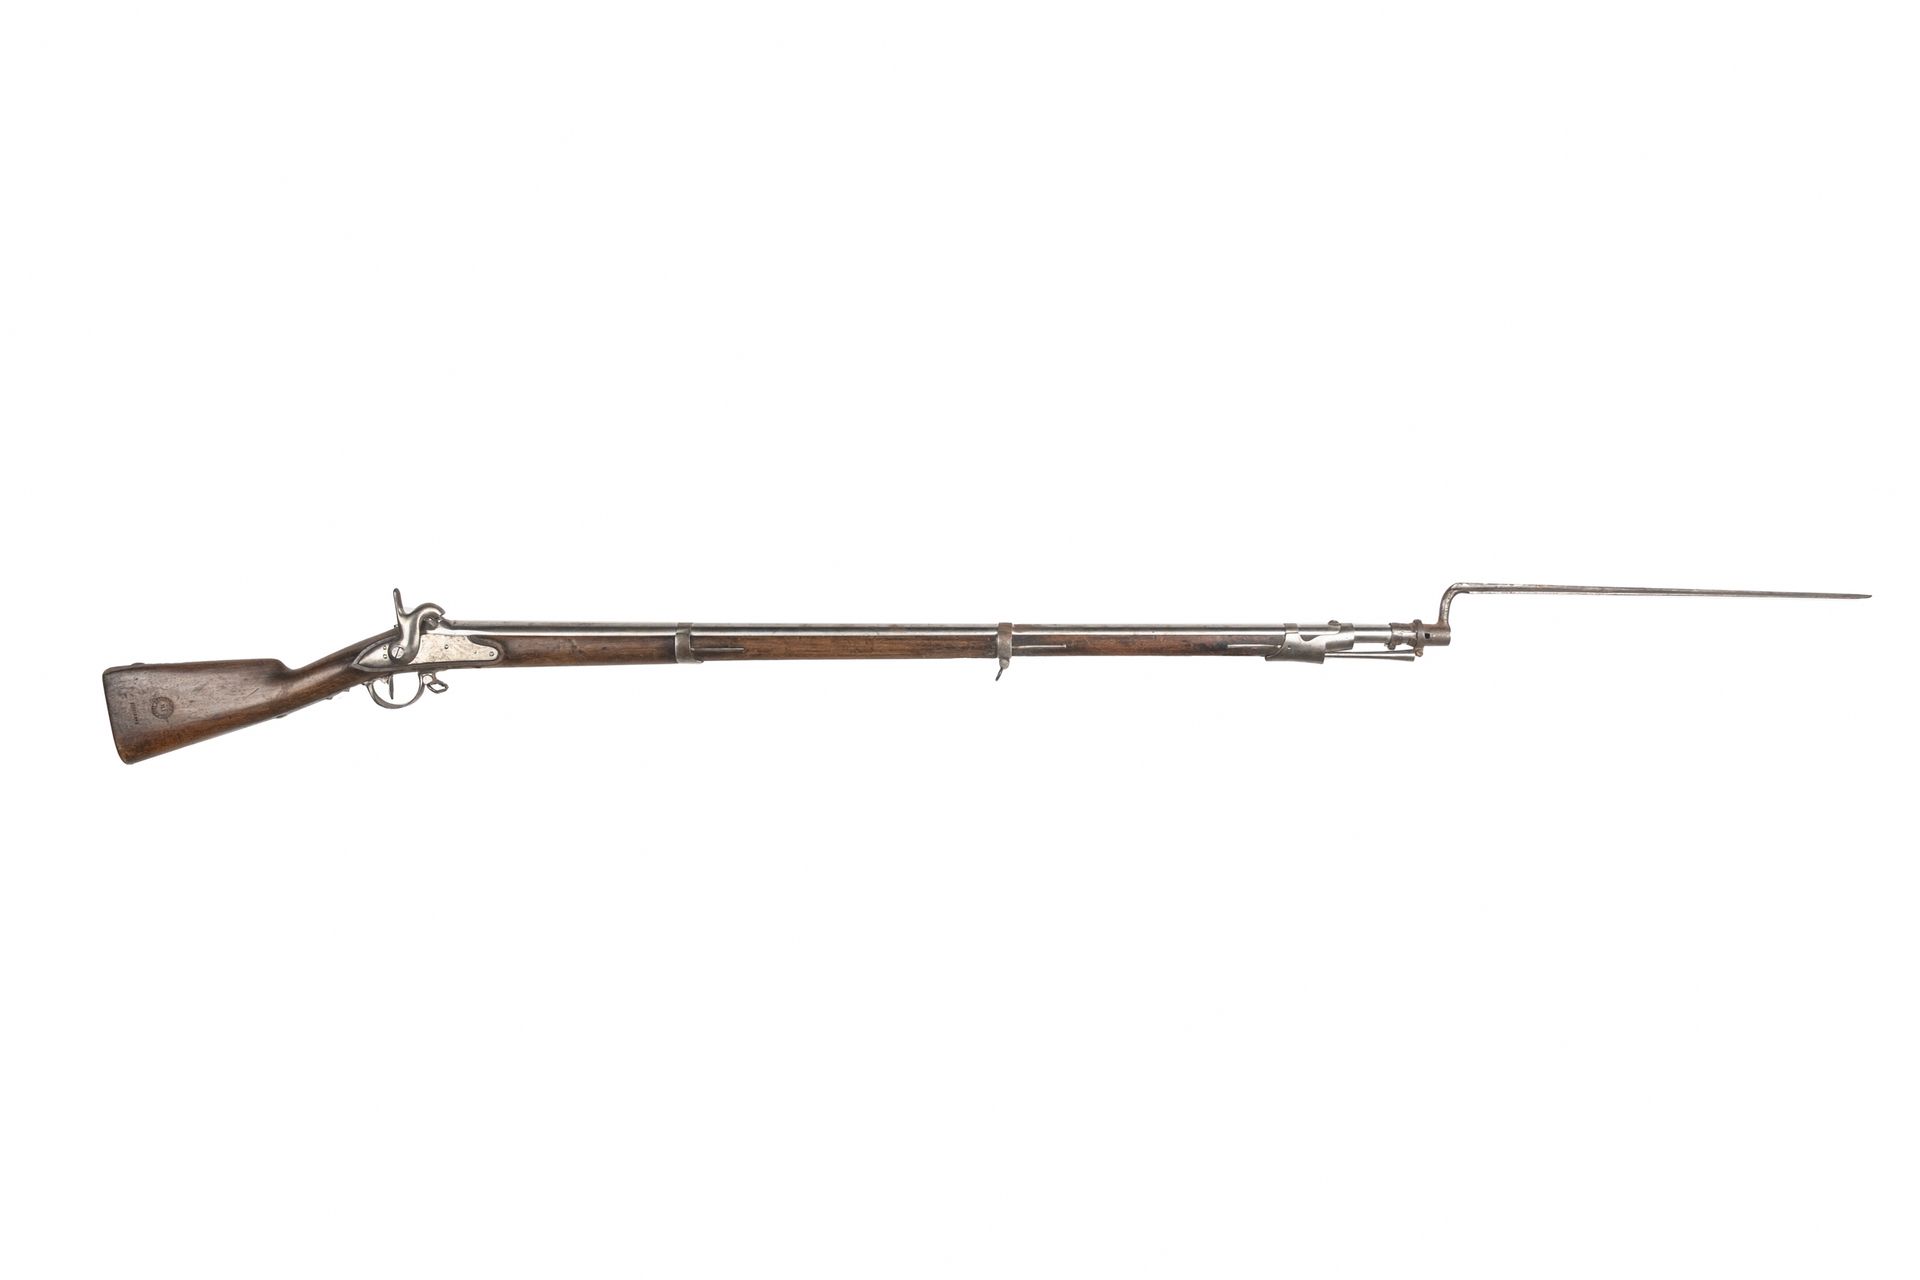 Null Fusil de granadero modelo 1822 transformado en modelo de percusión 1840. 

&hellip;